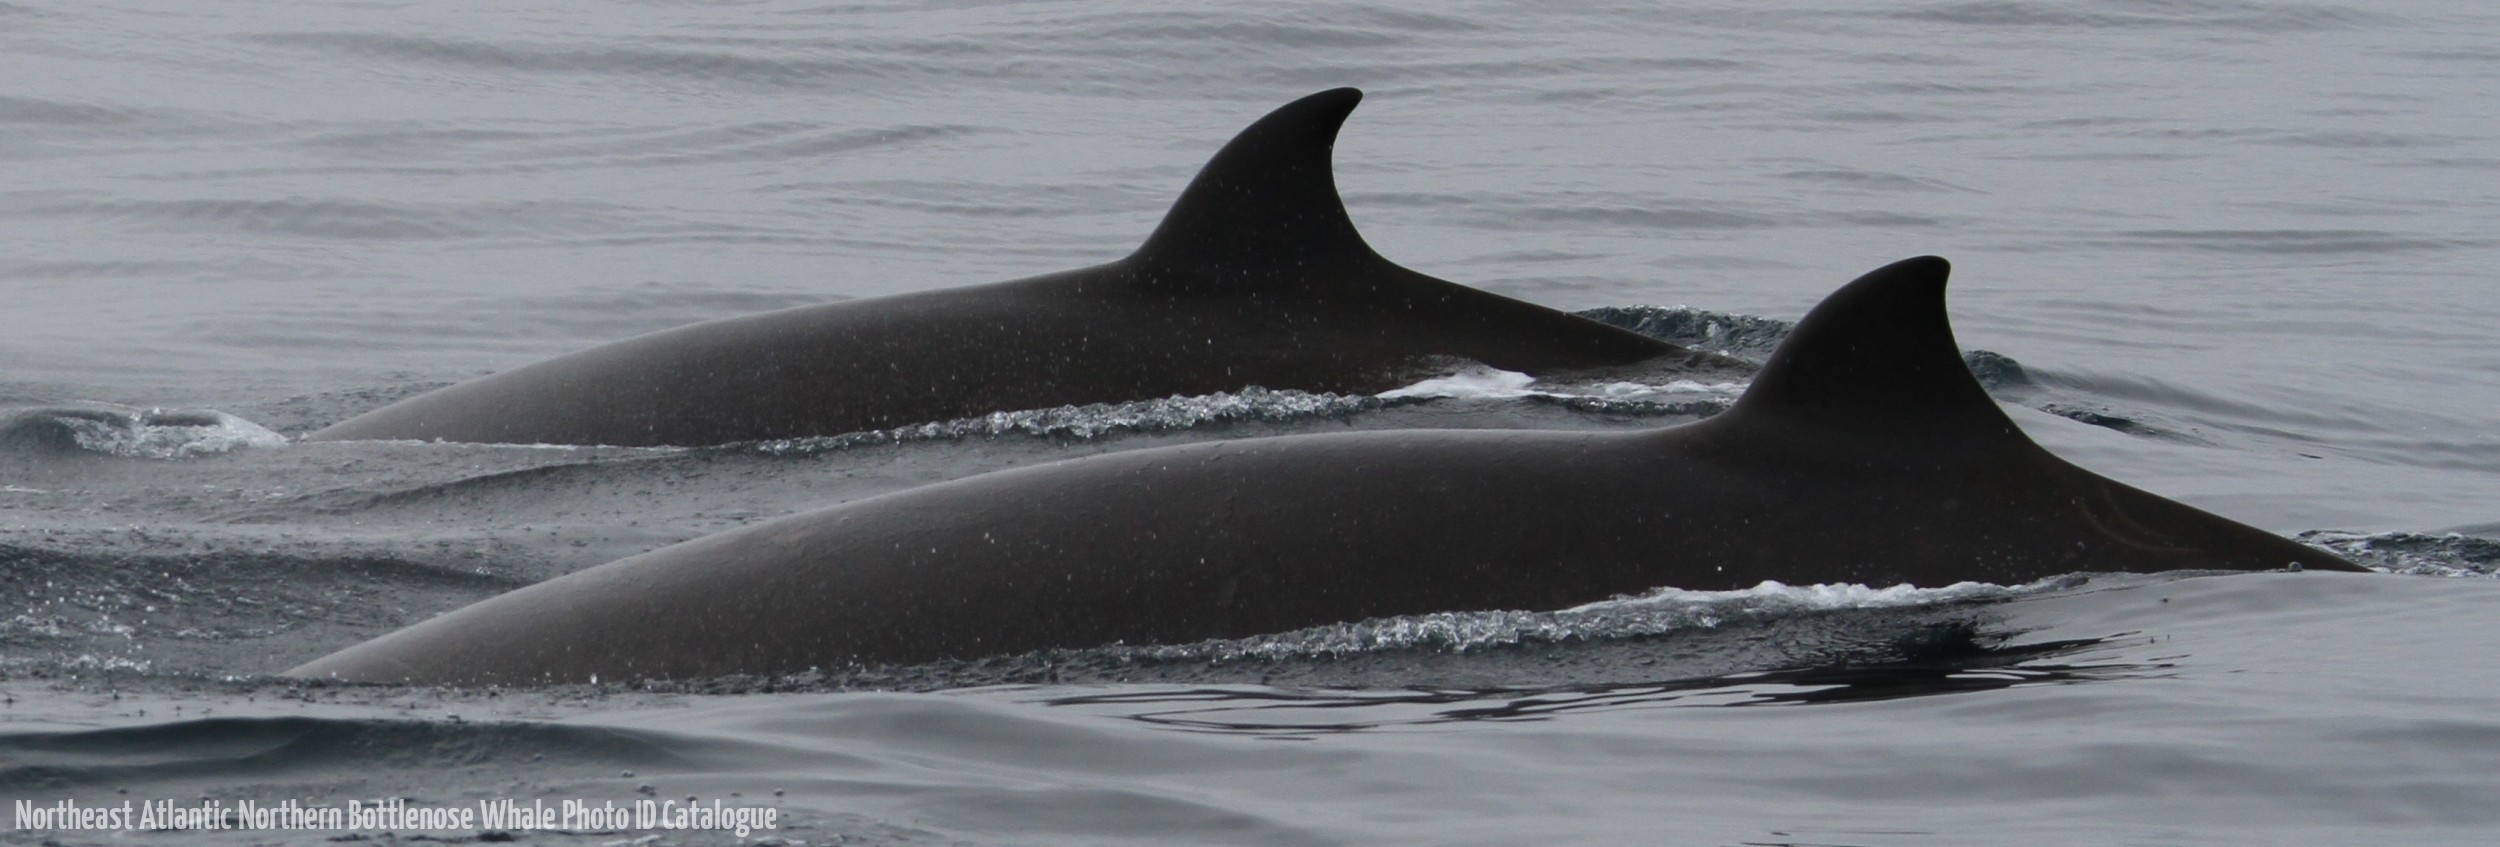 Whale ID: 0025,  Date taken: 10-07-2013,  Photographer: Paul H. Ensor